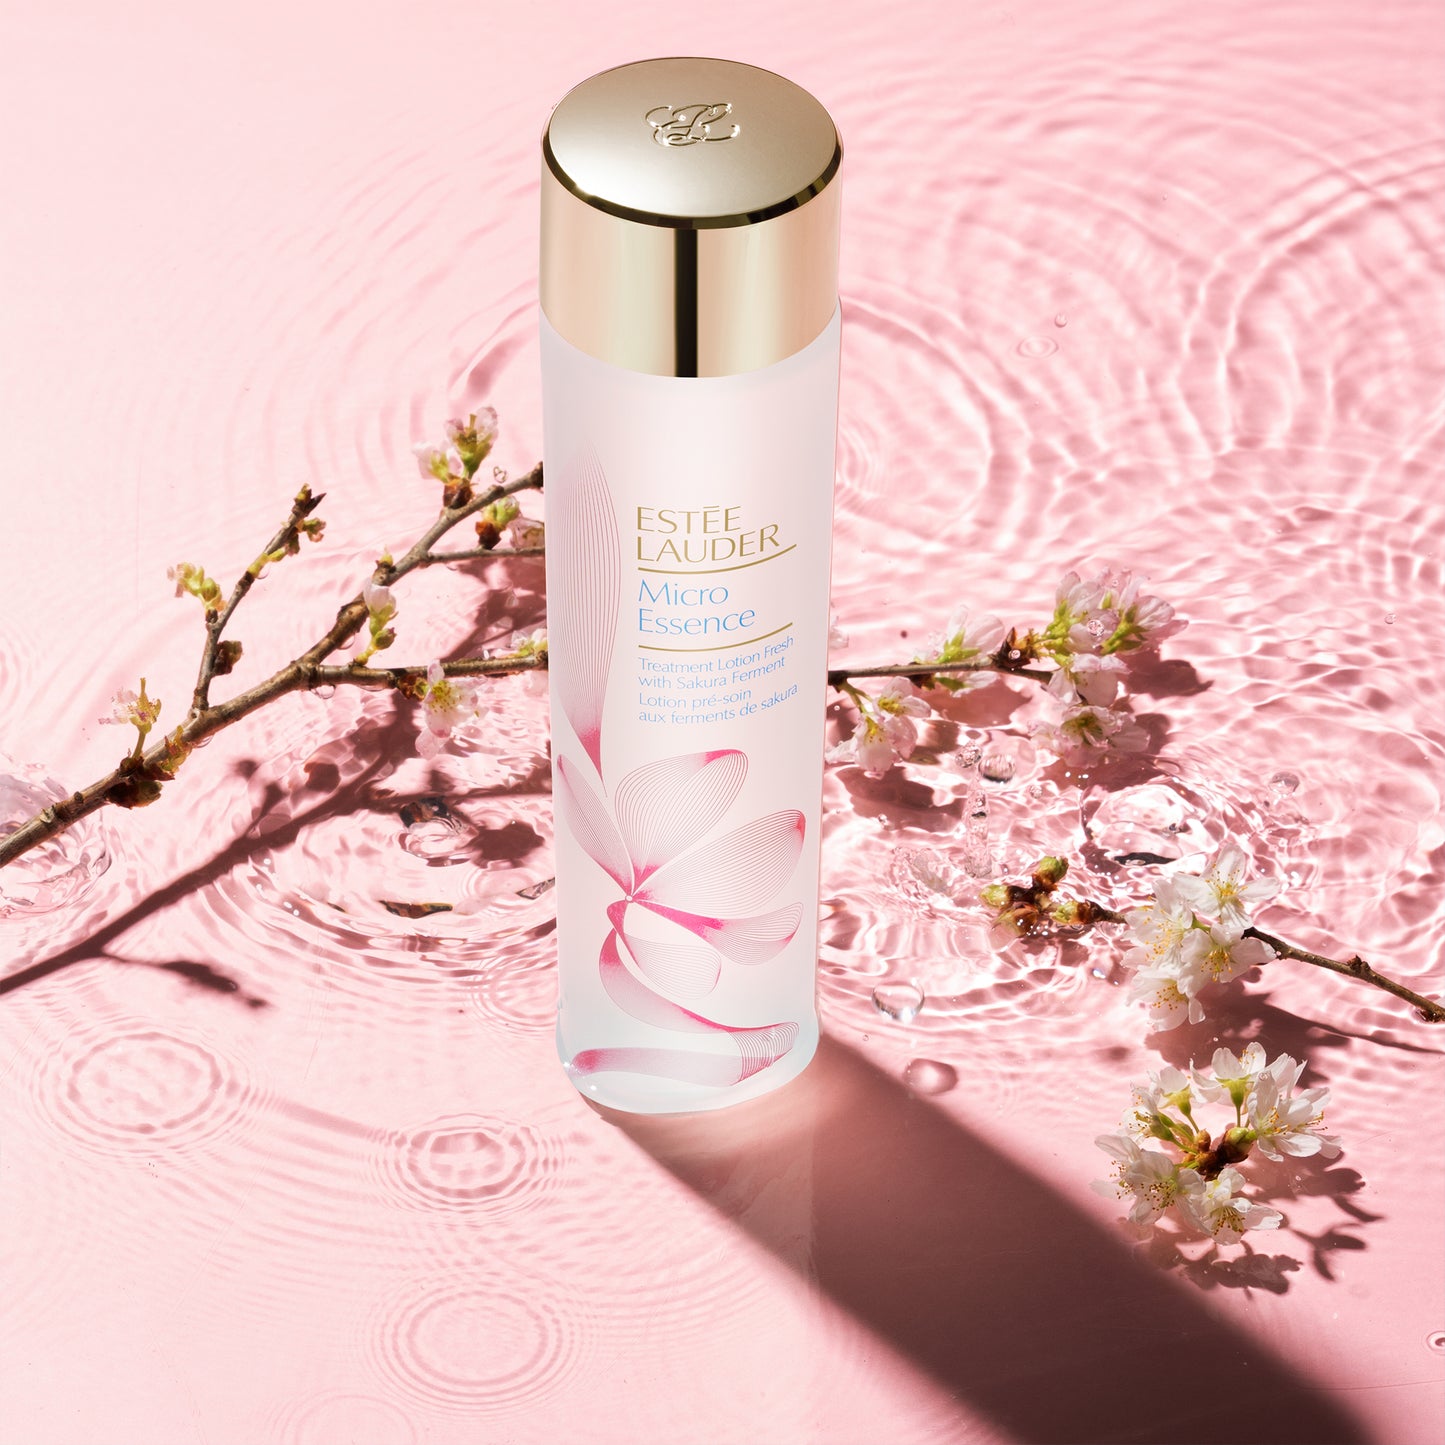 Micro Essence Skin Activating Treatment Lotion Fresh with Sakura Ferment